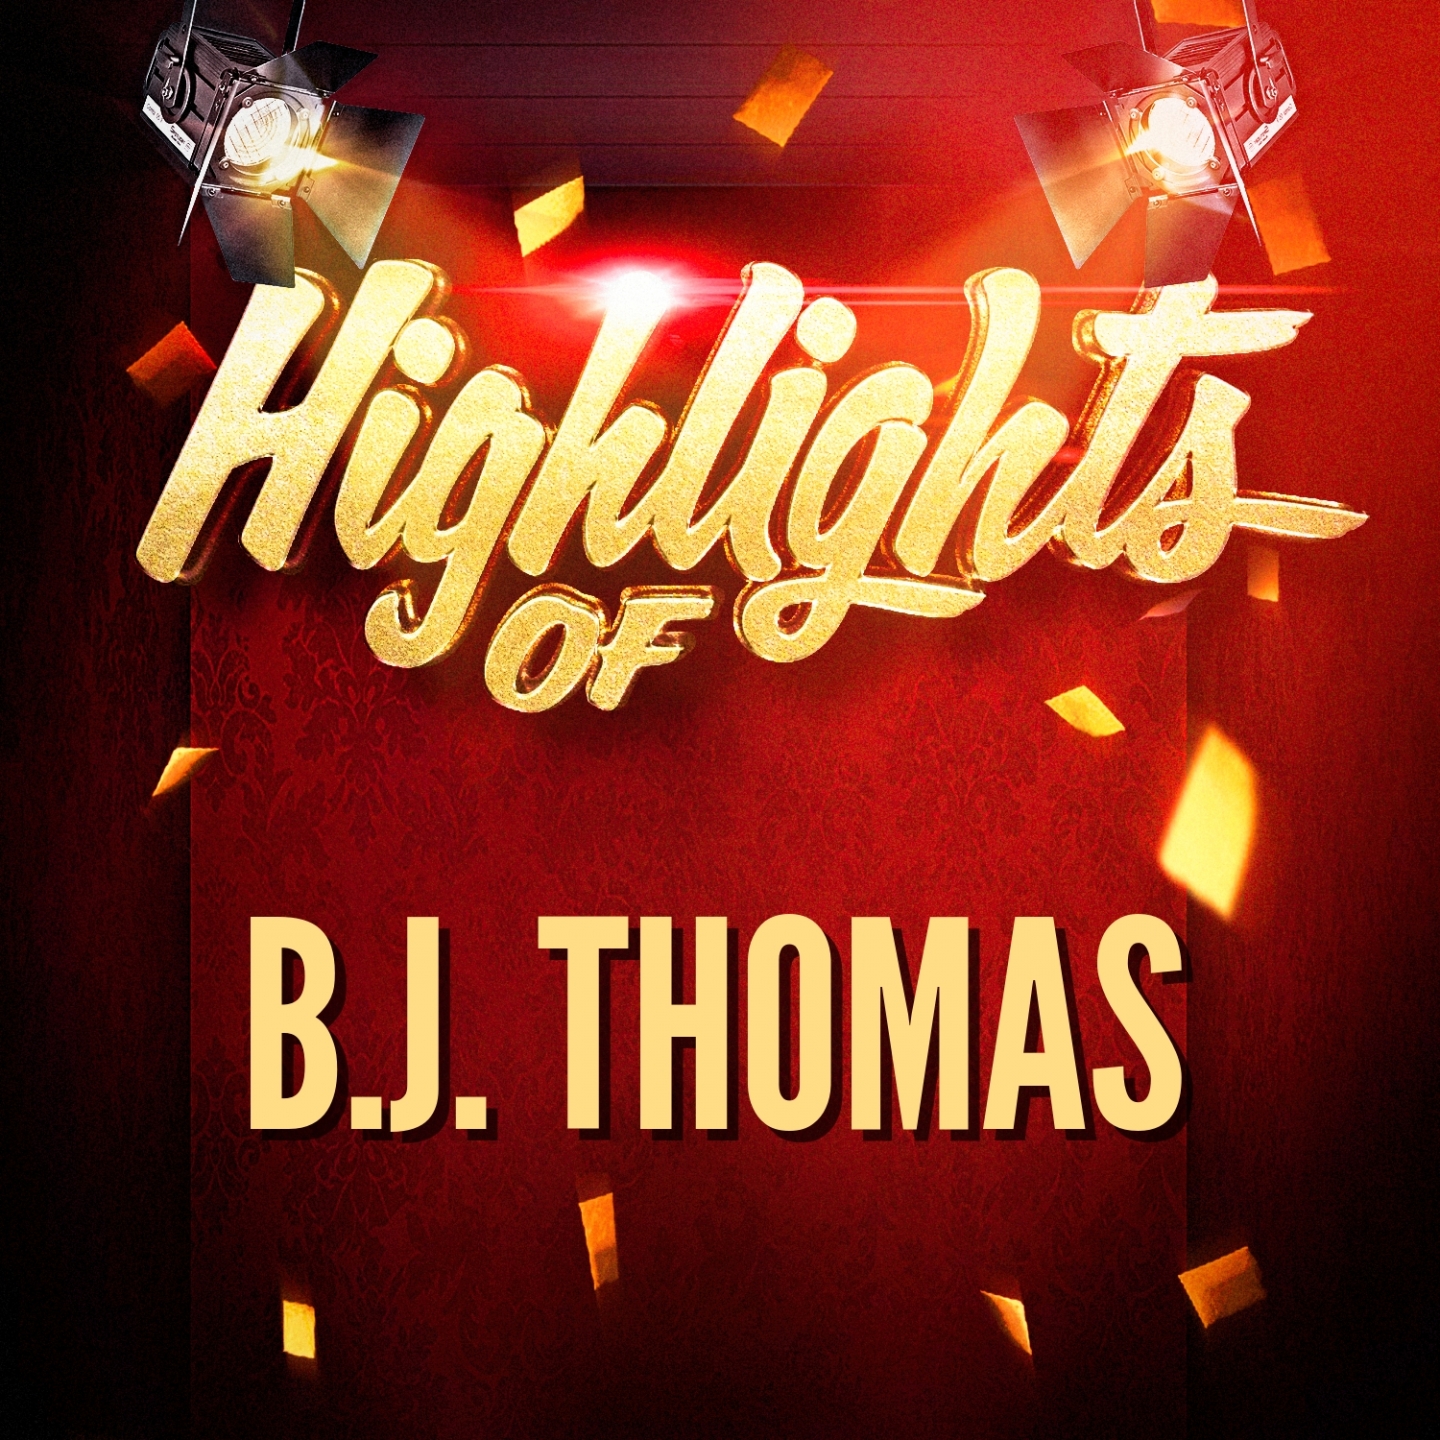 Highlights of B.J. Thomas